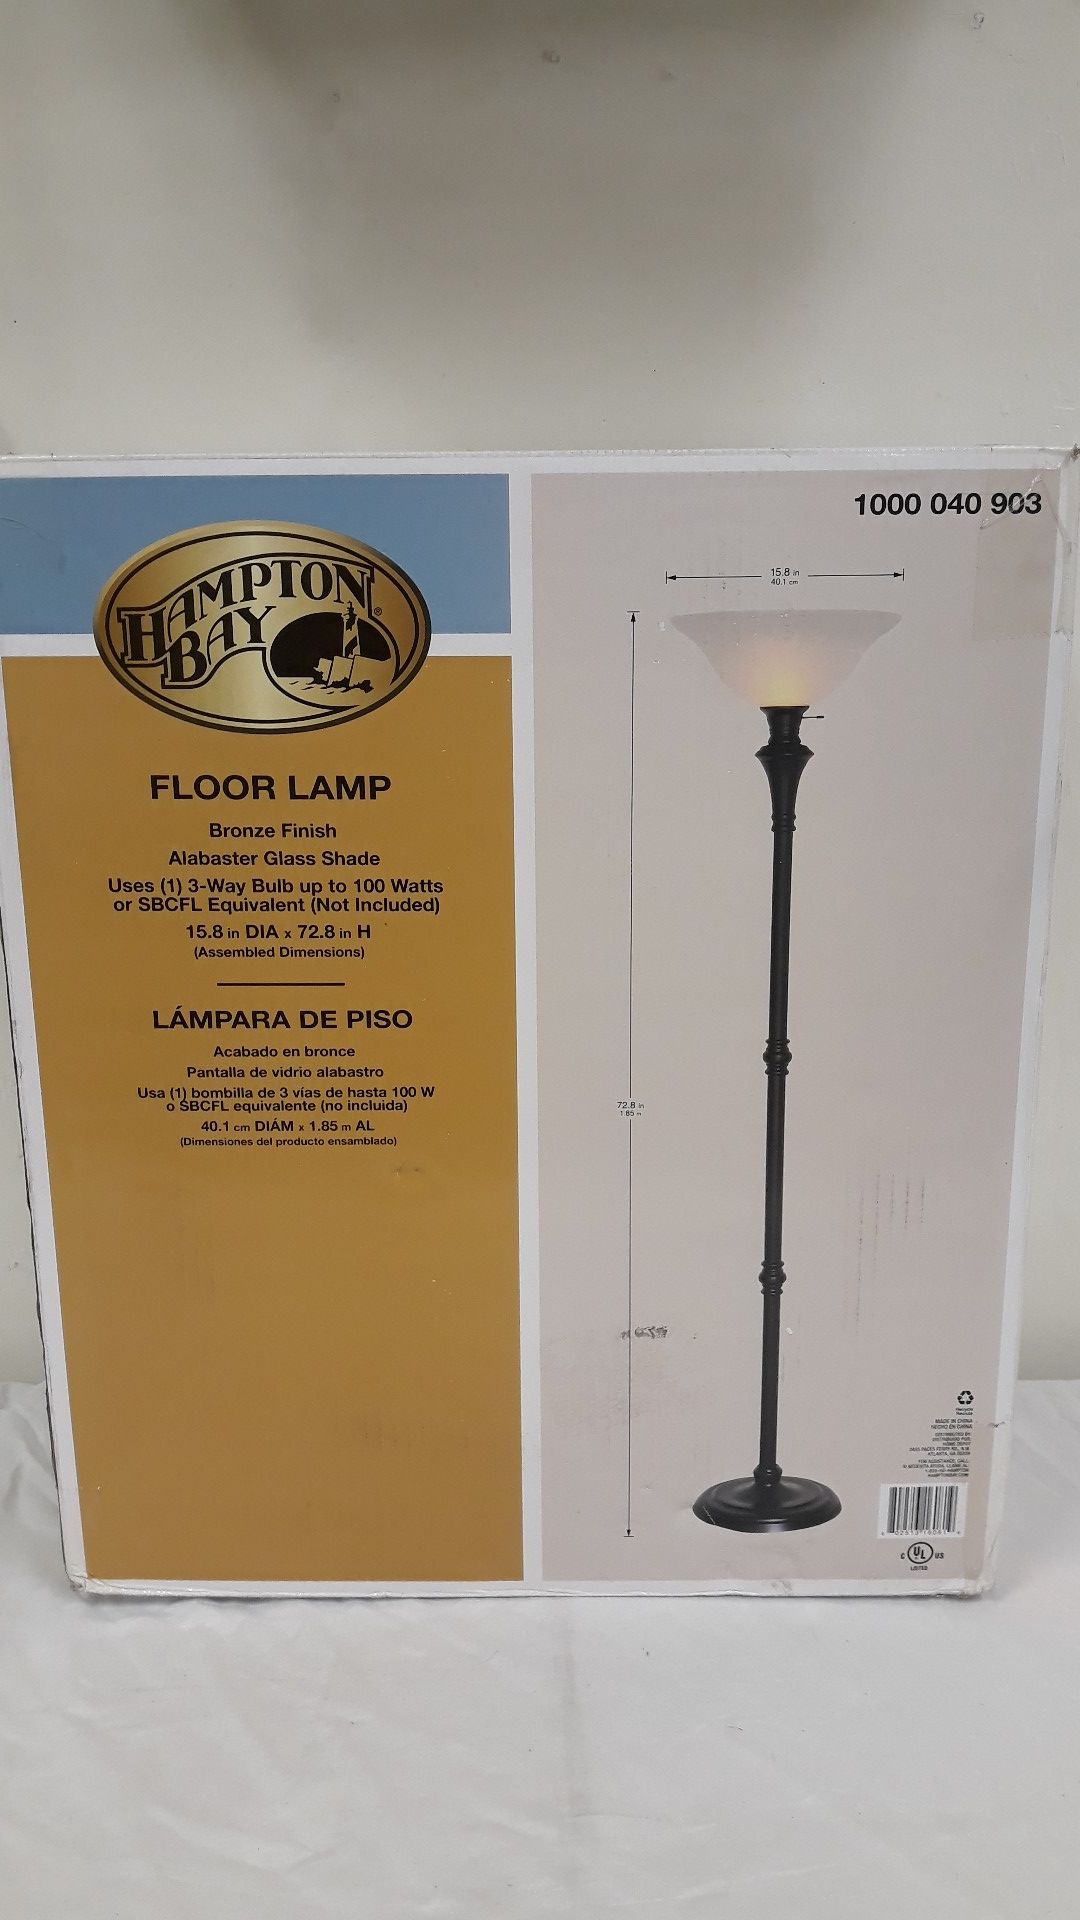 Brand new in box 72 in floor lamp in Bronze finish three-way bulbs up to 100 Watts